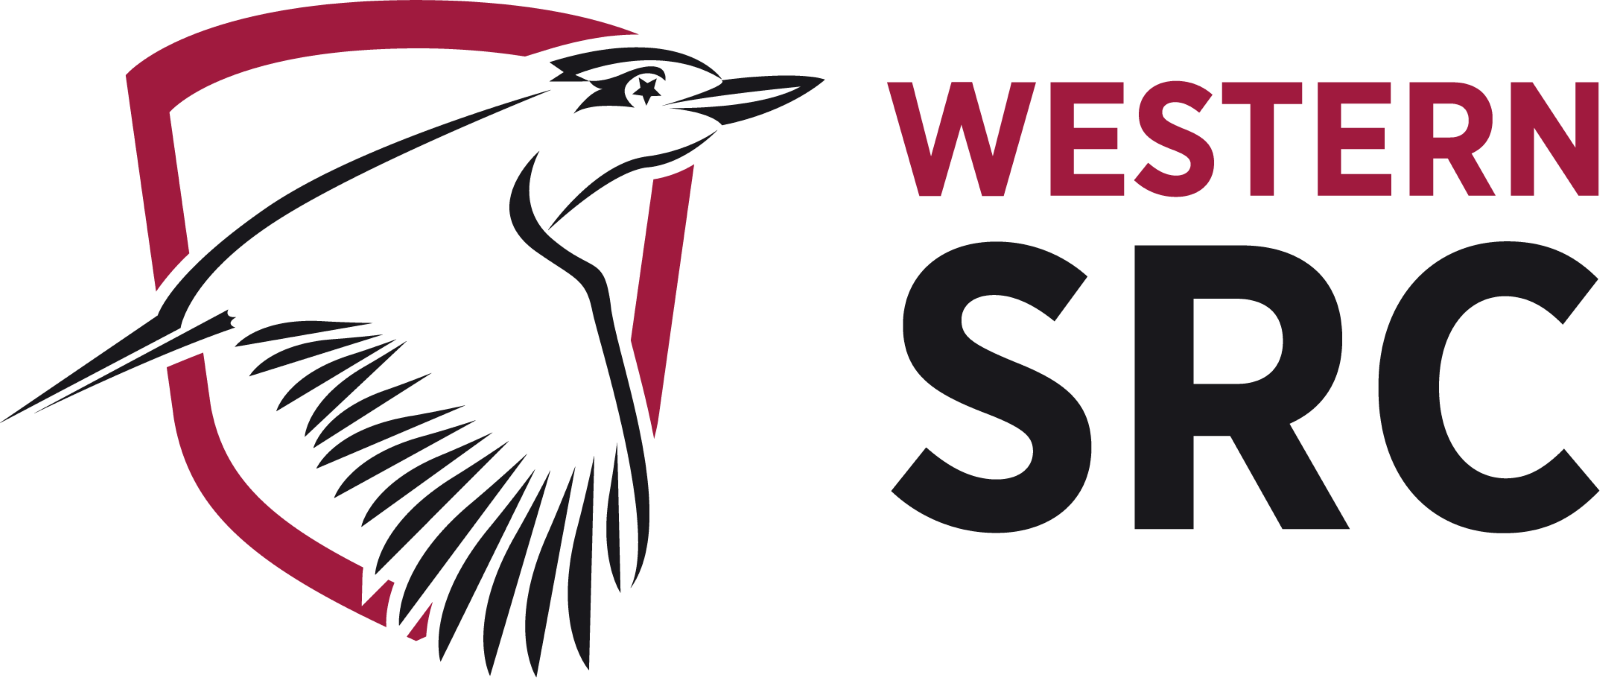 Western SRC